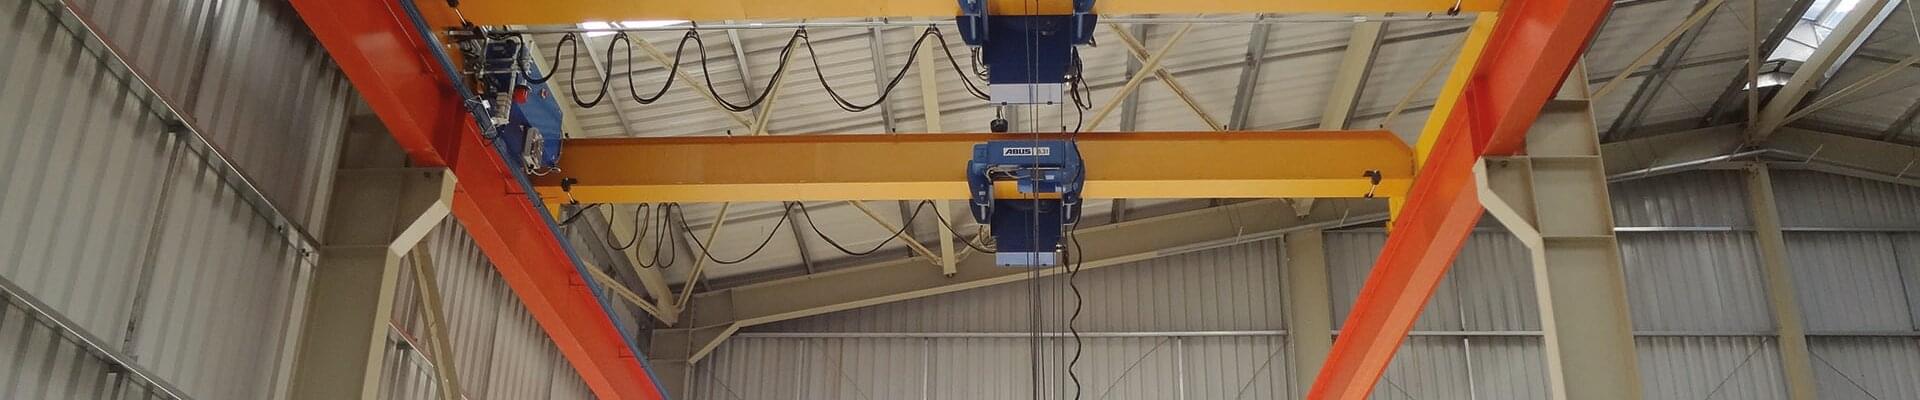 ABUS crane in company Bruning Tecnometal in Brazil